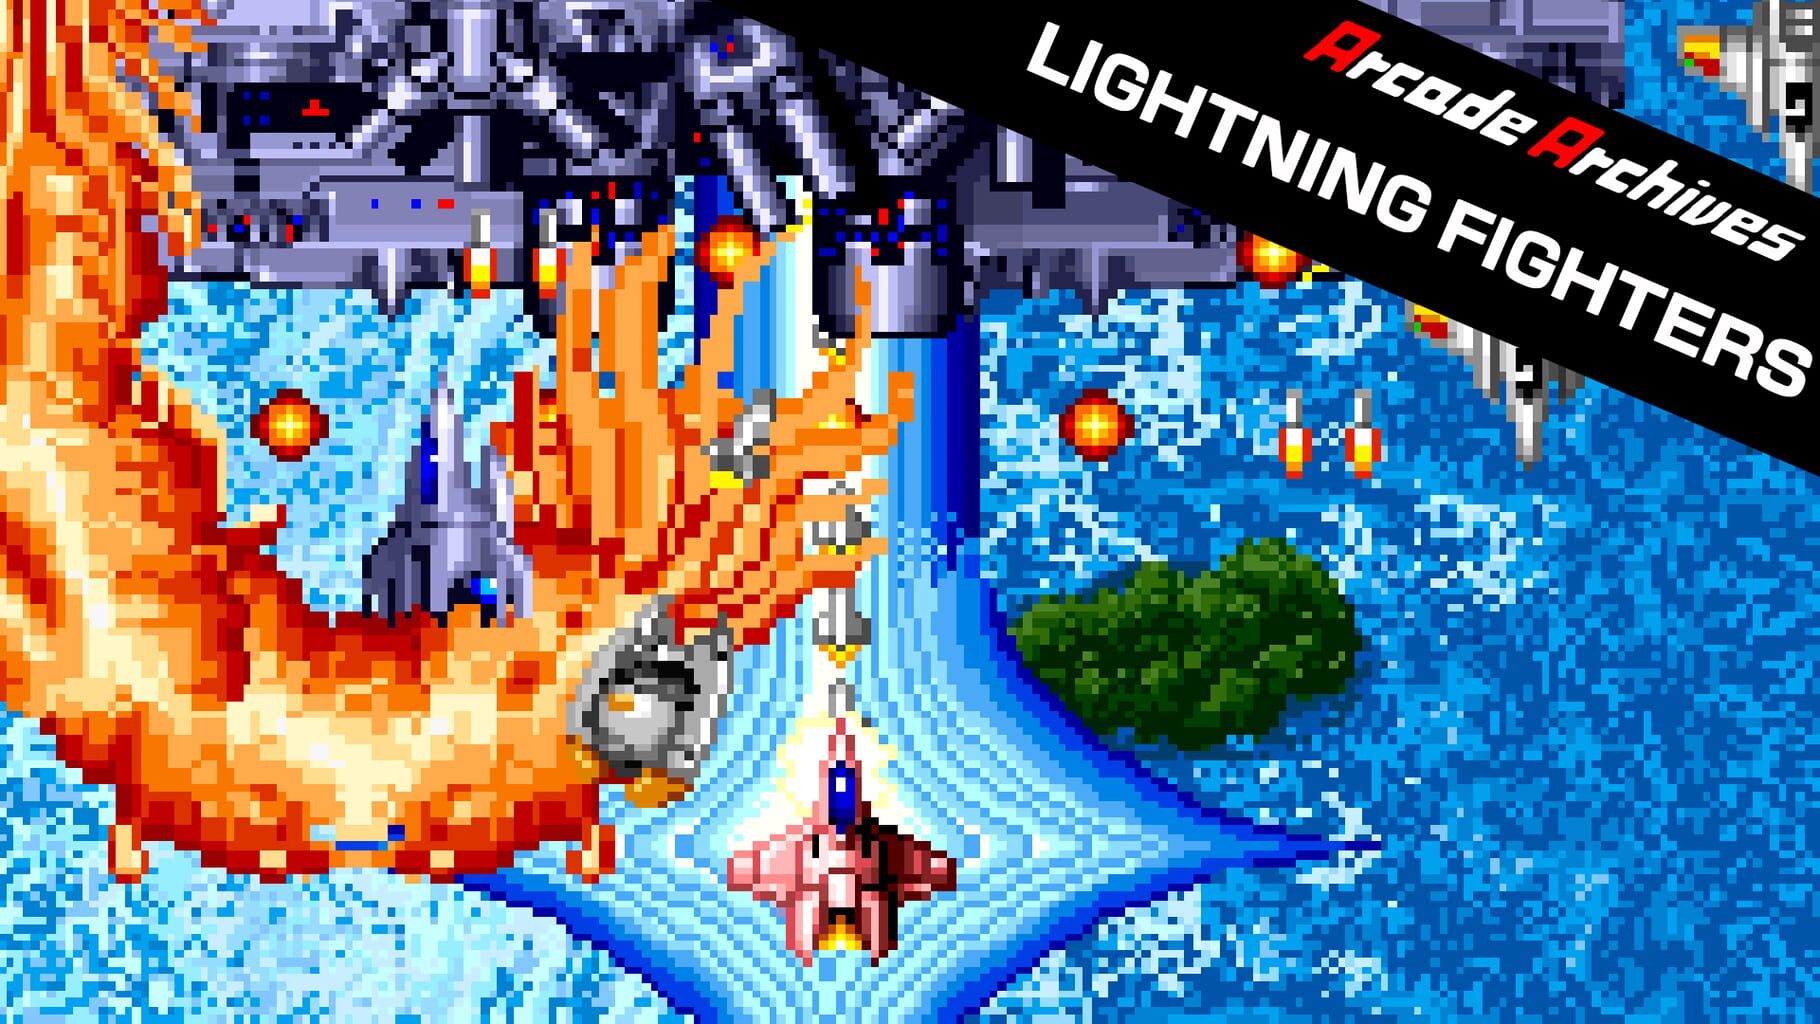 Arcade Archives: Lightning Fighters artwork